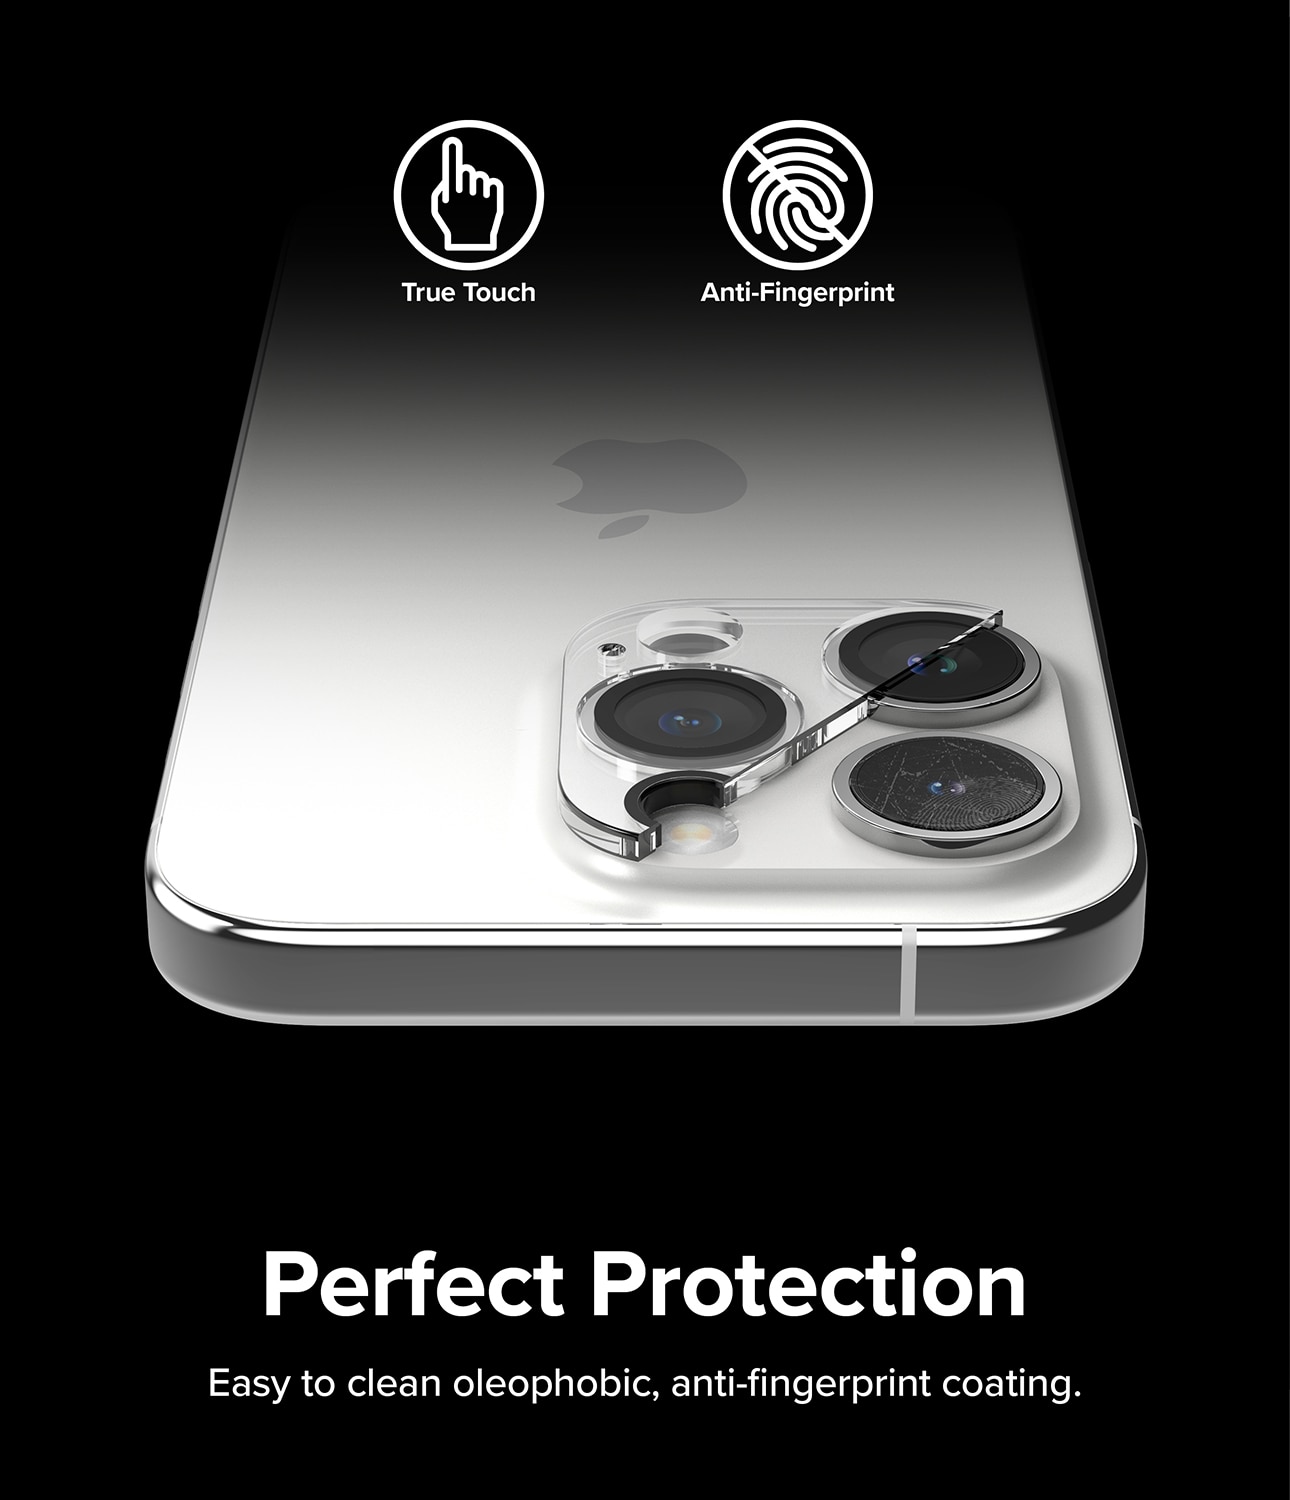 Camera Protector Glass (2 pièces) iPhone 15 Pro Transparent